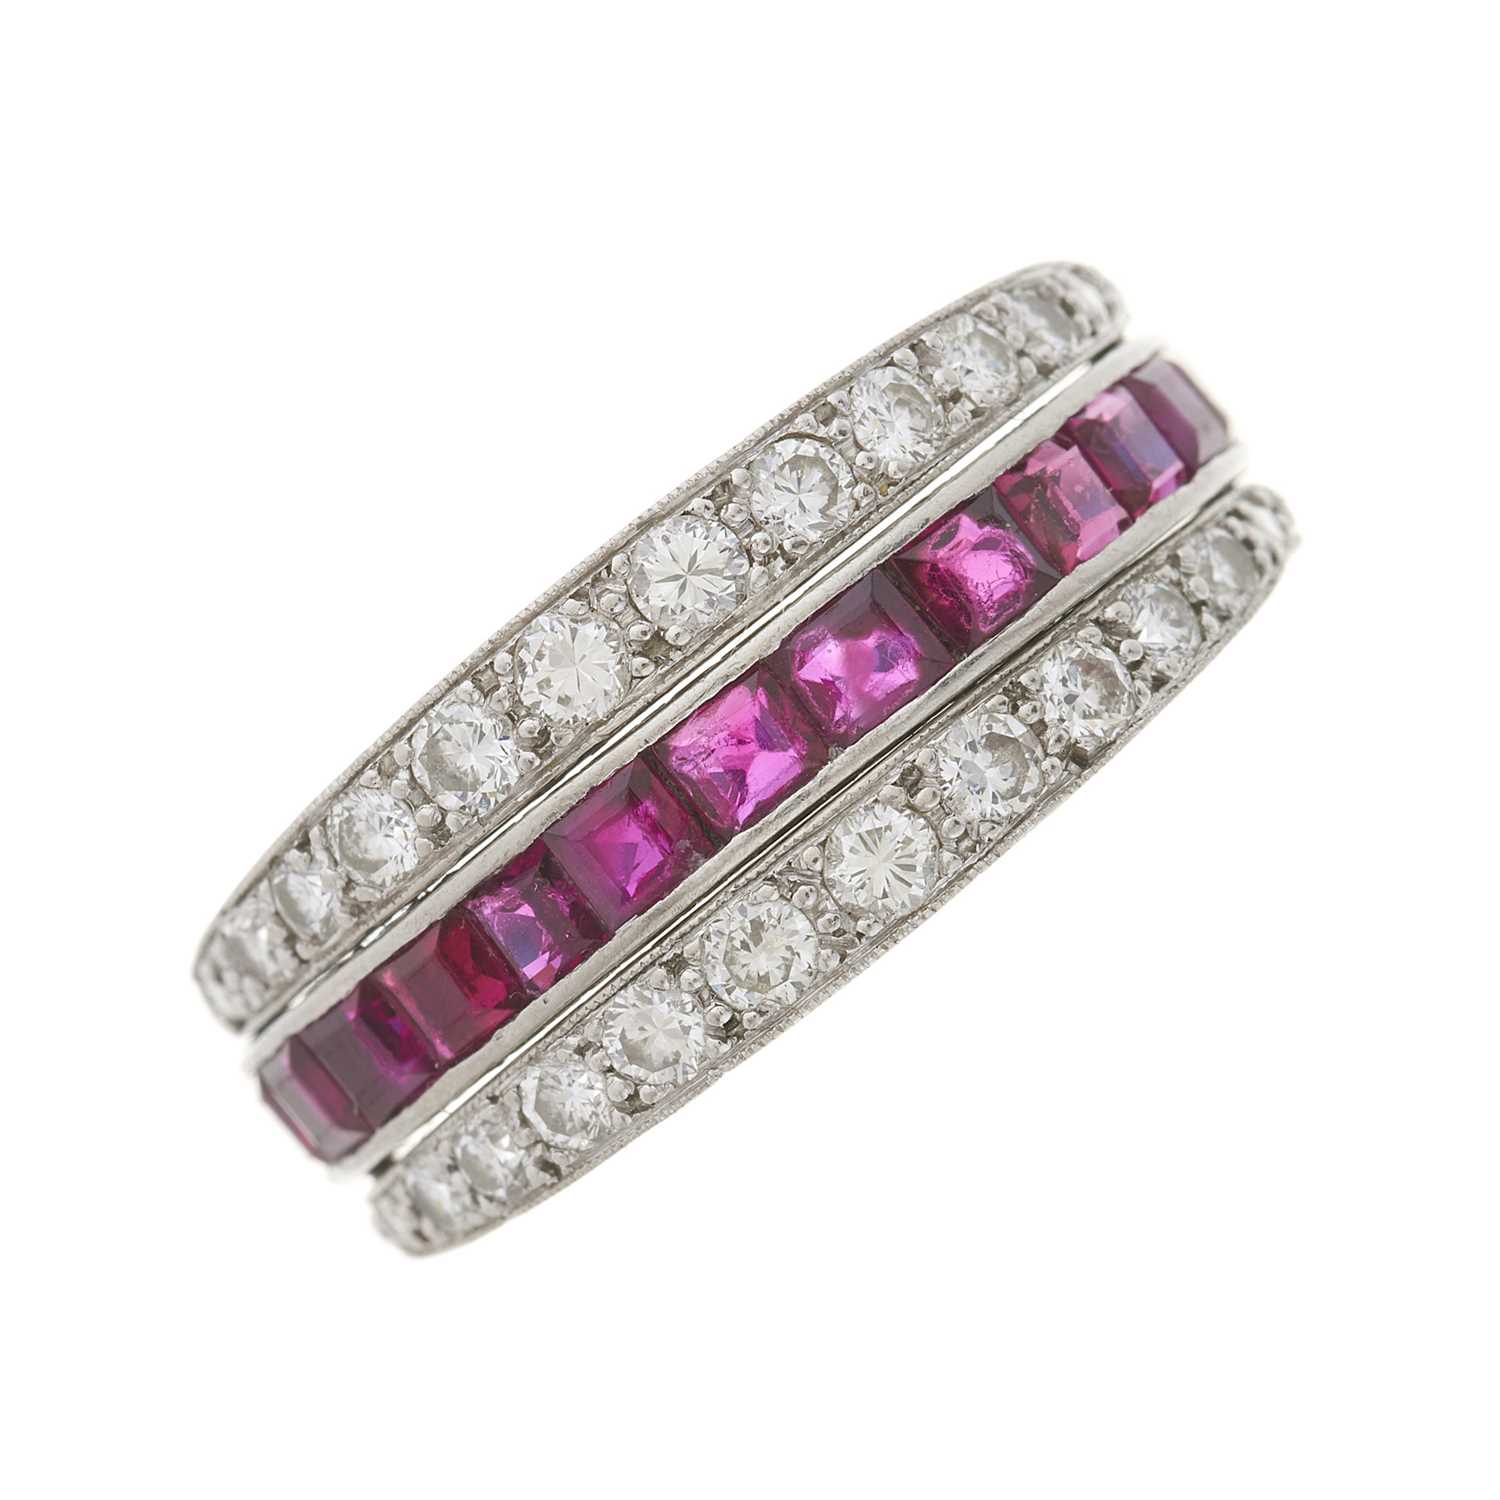 Lot 45 - An Art Deco platinum ruby, sapphire and diamond flip ring